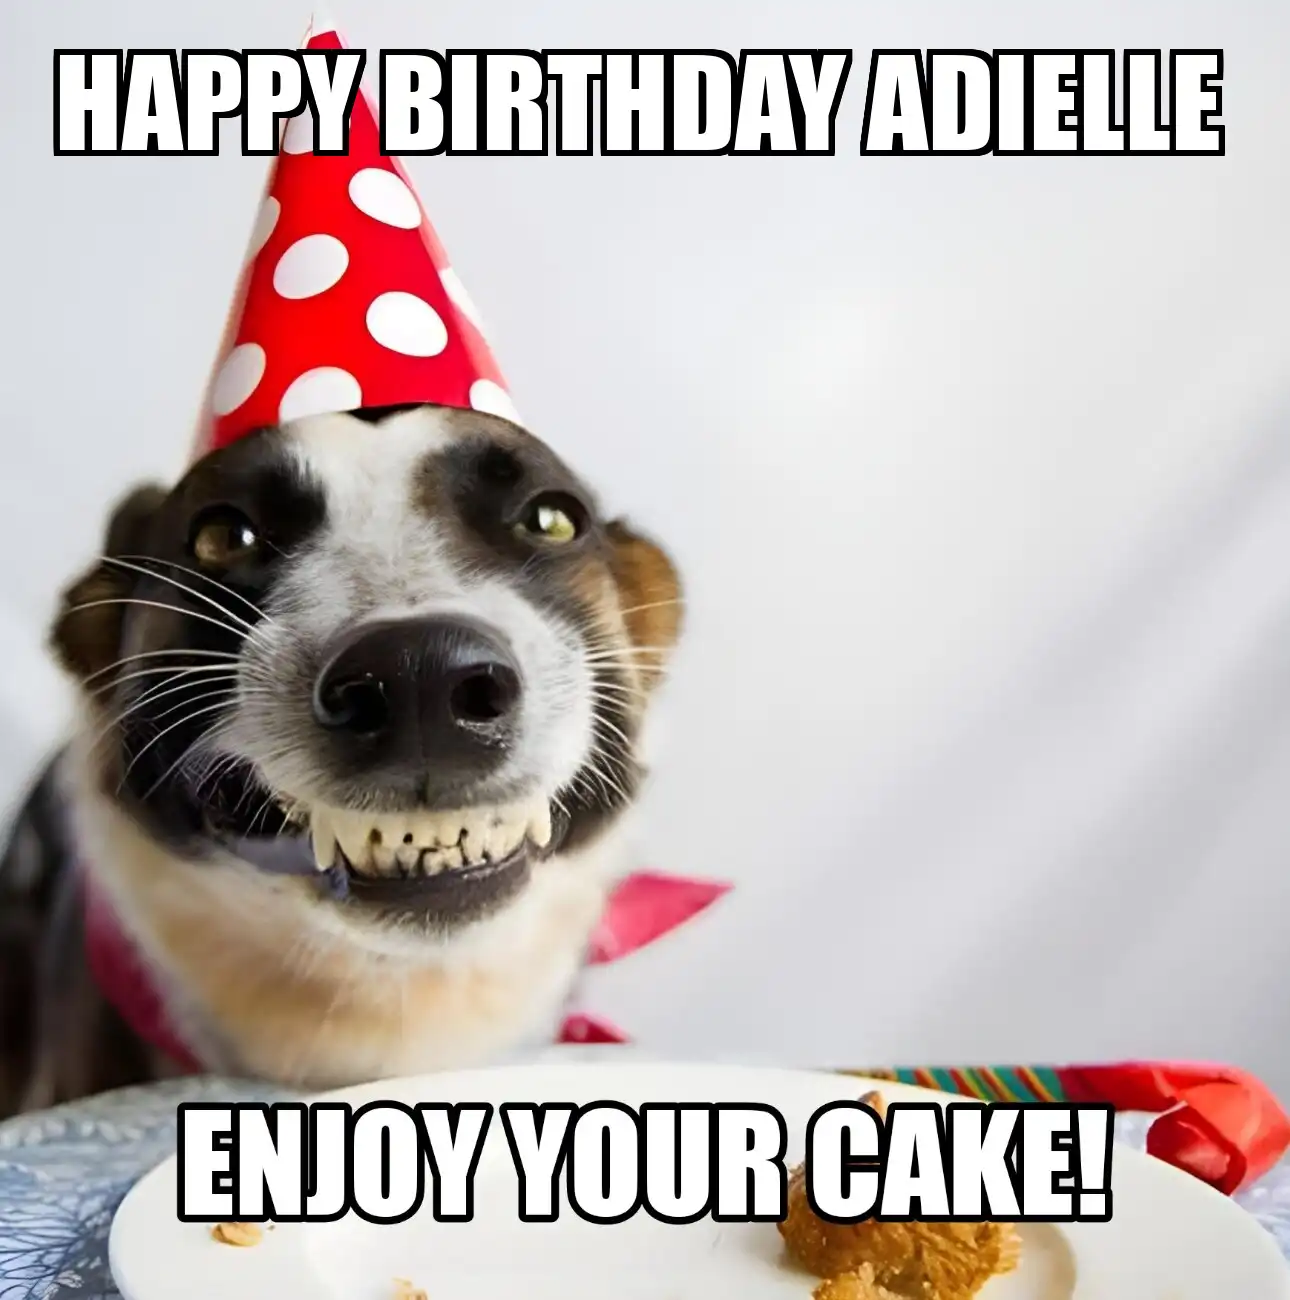 Happy Birthday Adielle Enjoy Your Cake Dog Meme